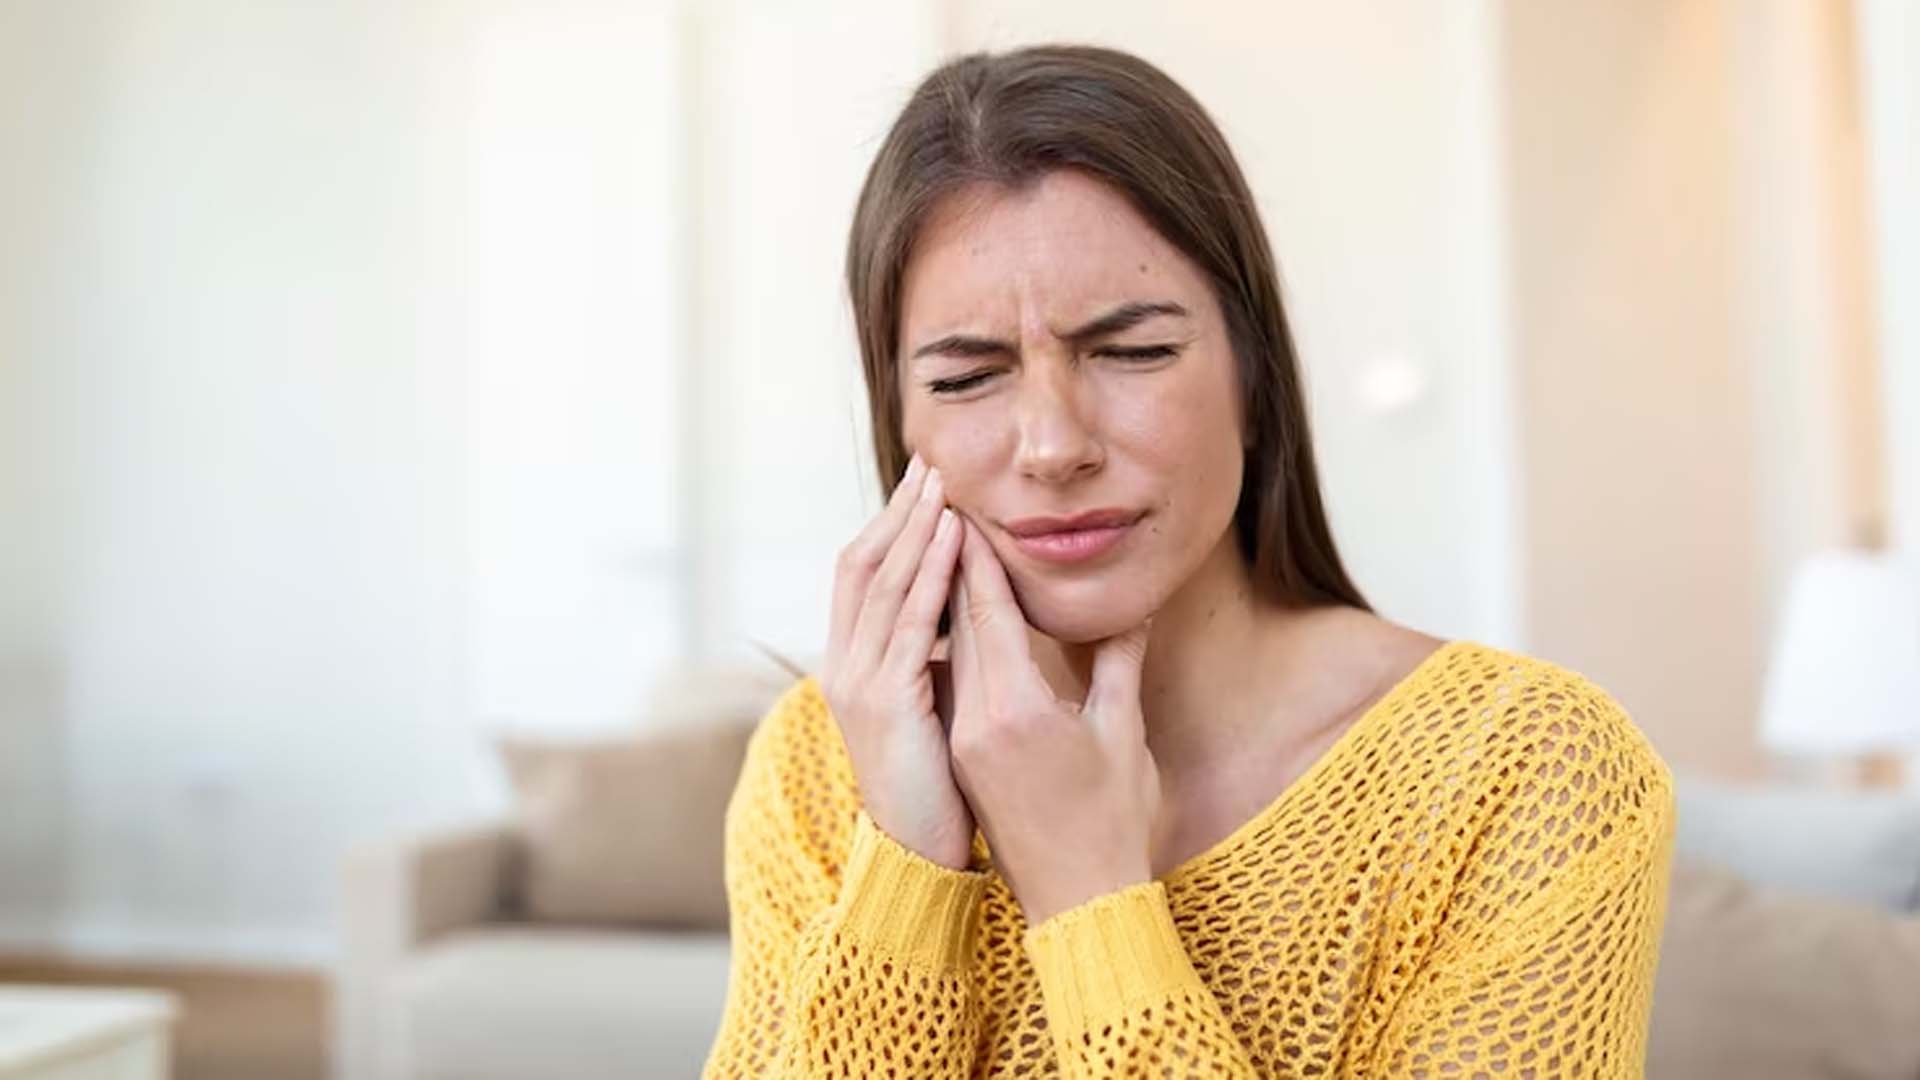 Does Wisdom Teeth Cause Pain?